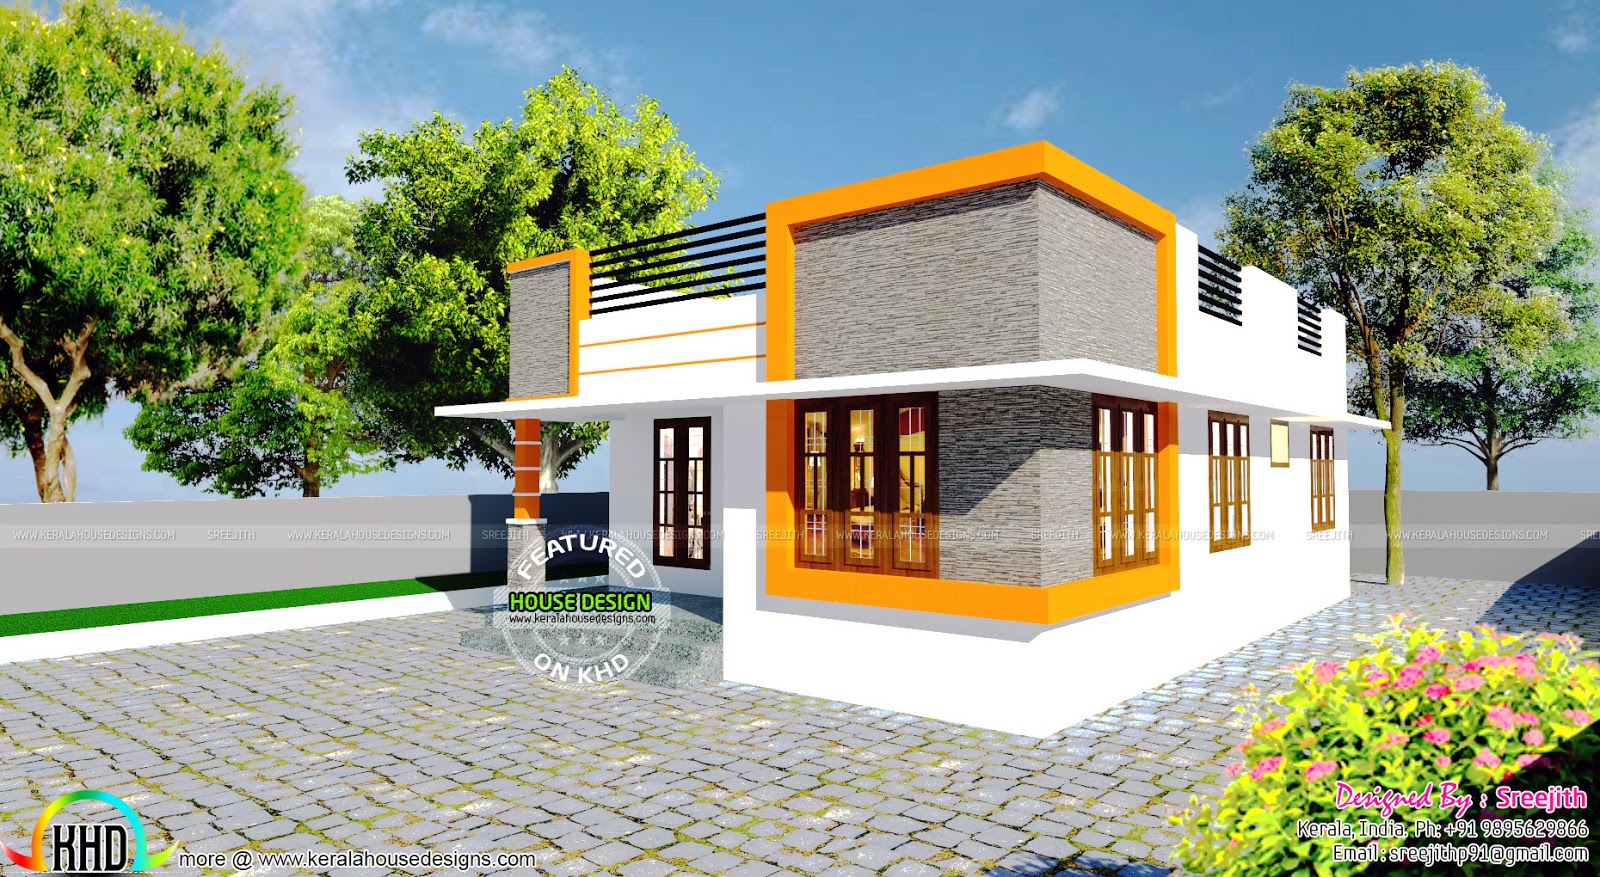 770 sqft small budget home Kerala home design and floor